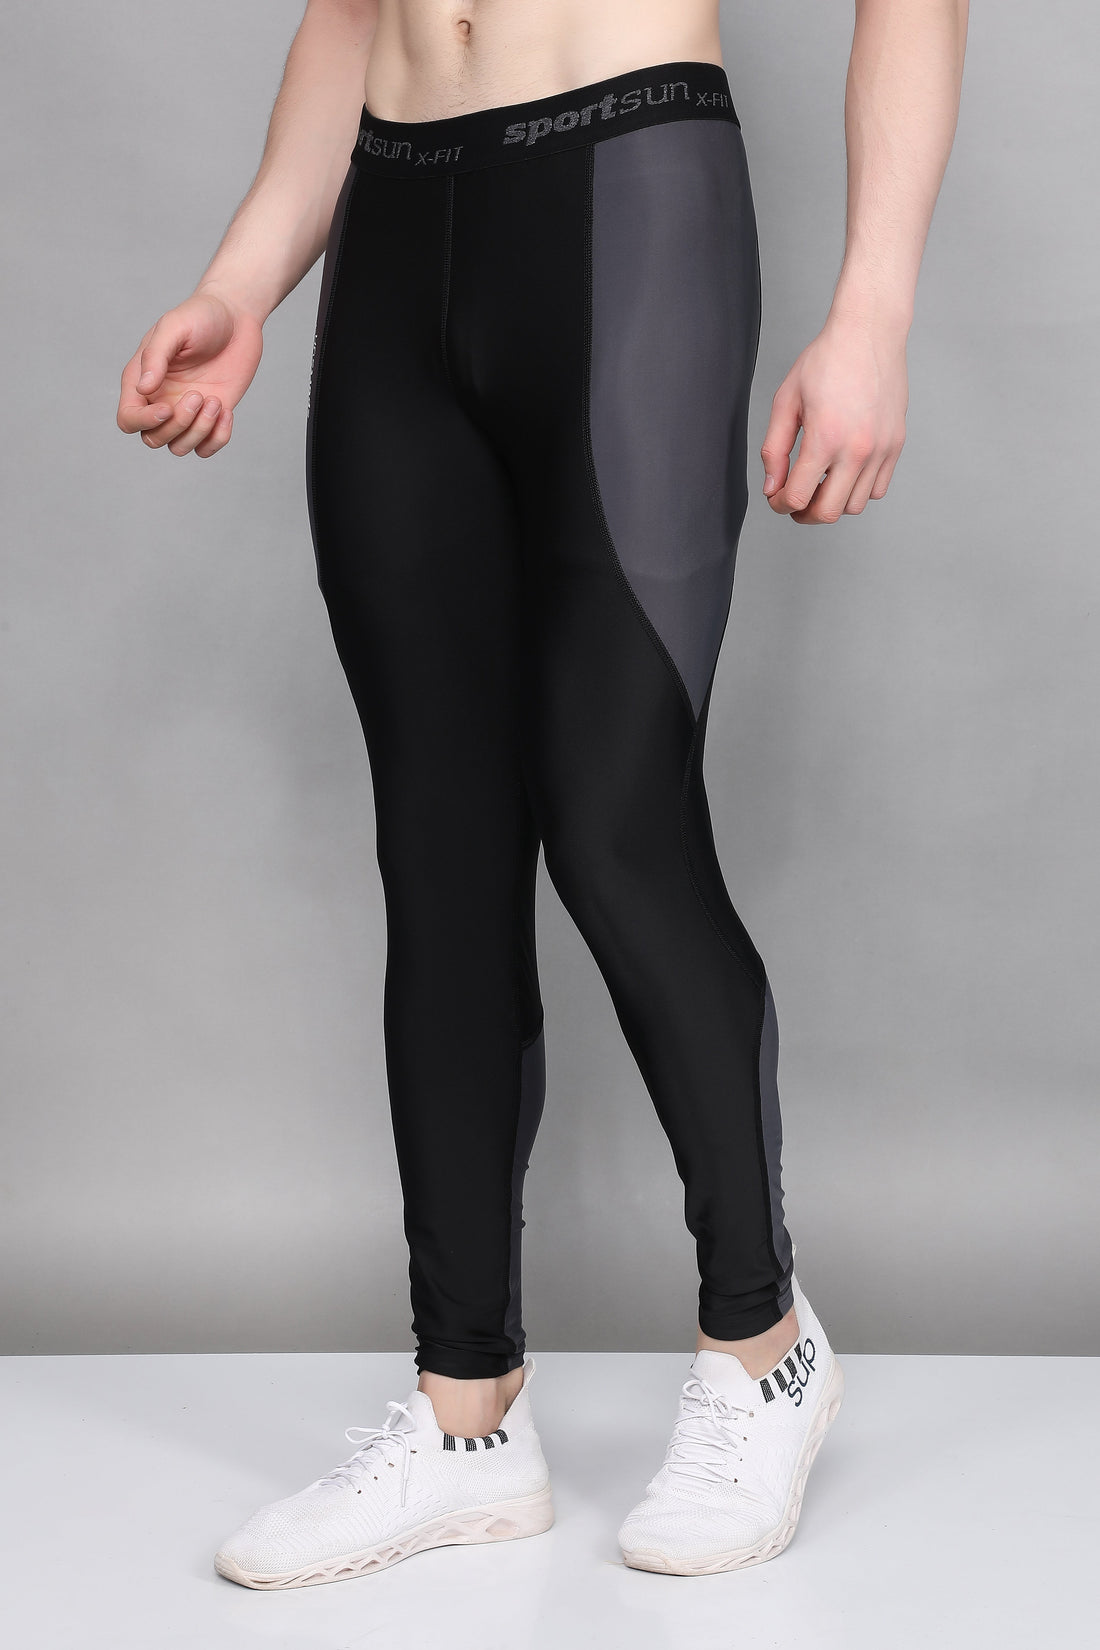 GB Edition Mens Compression Pants - Black – GB Wear